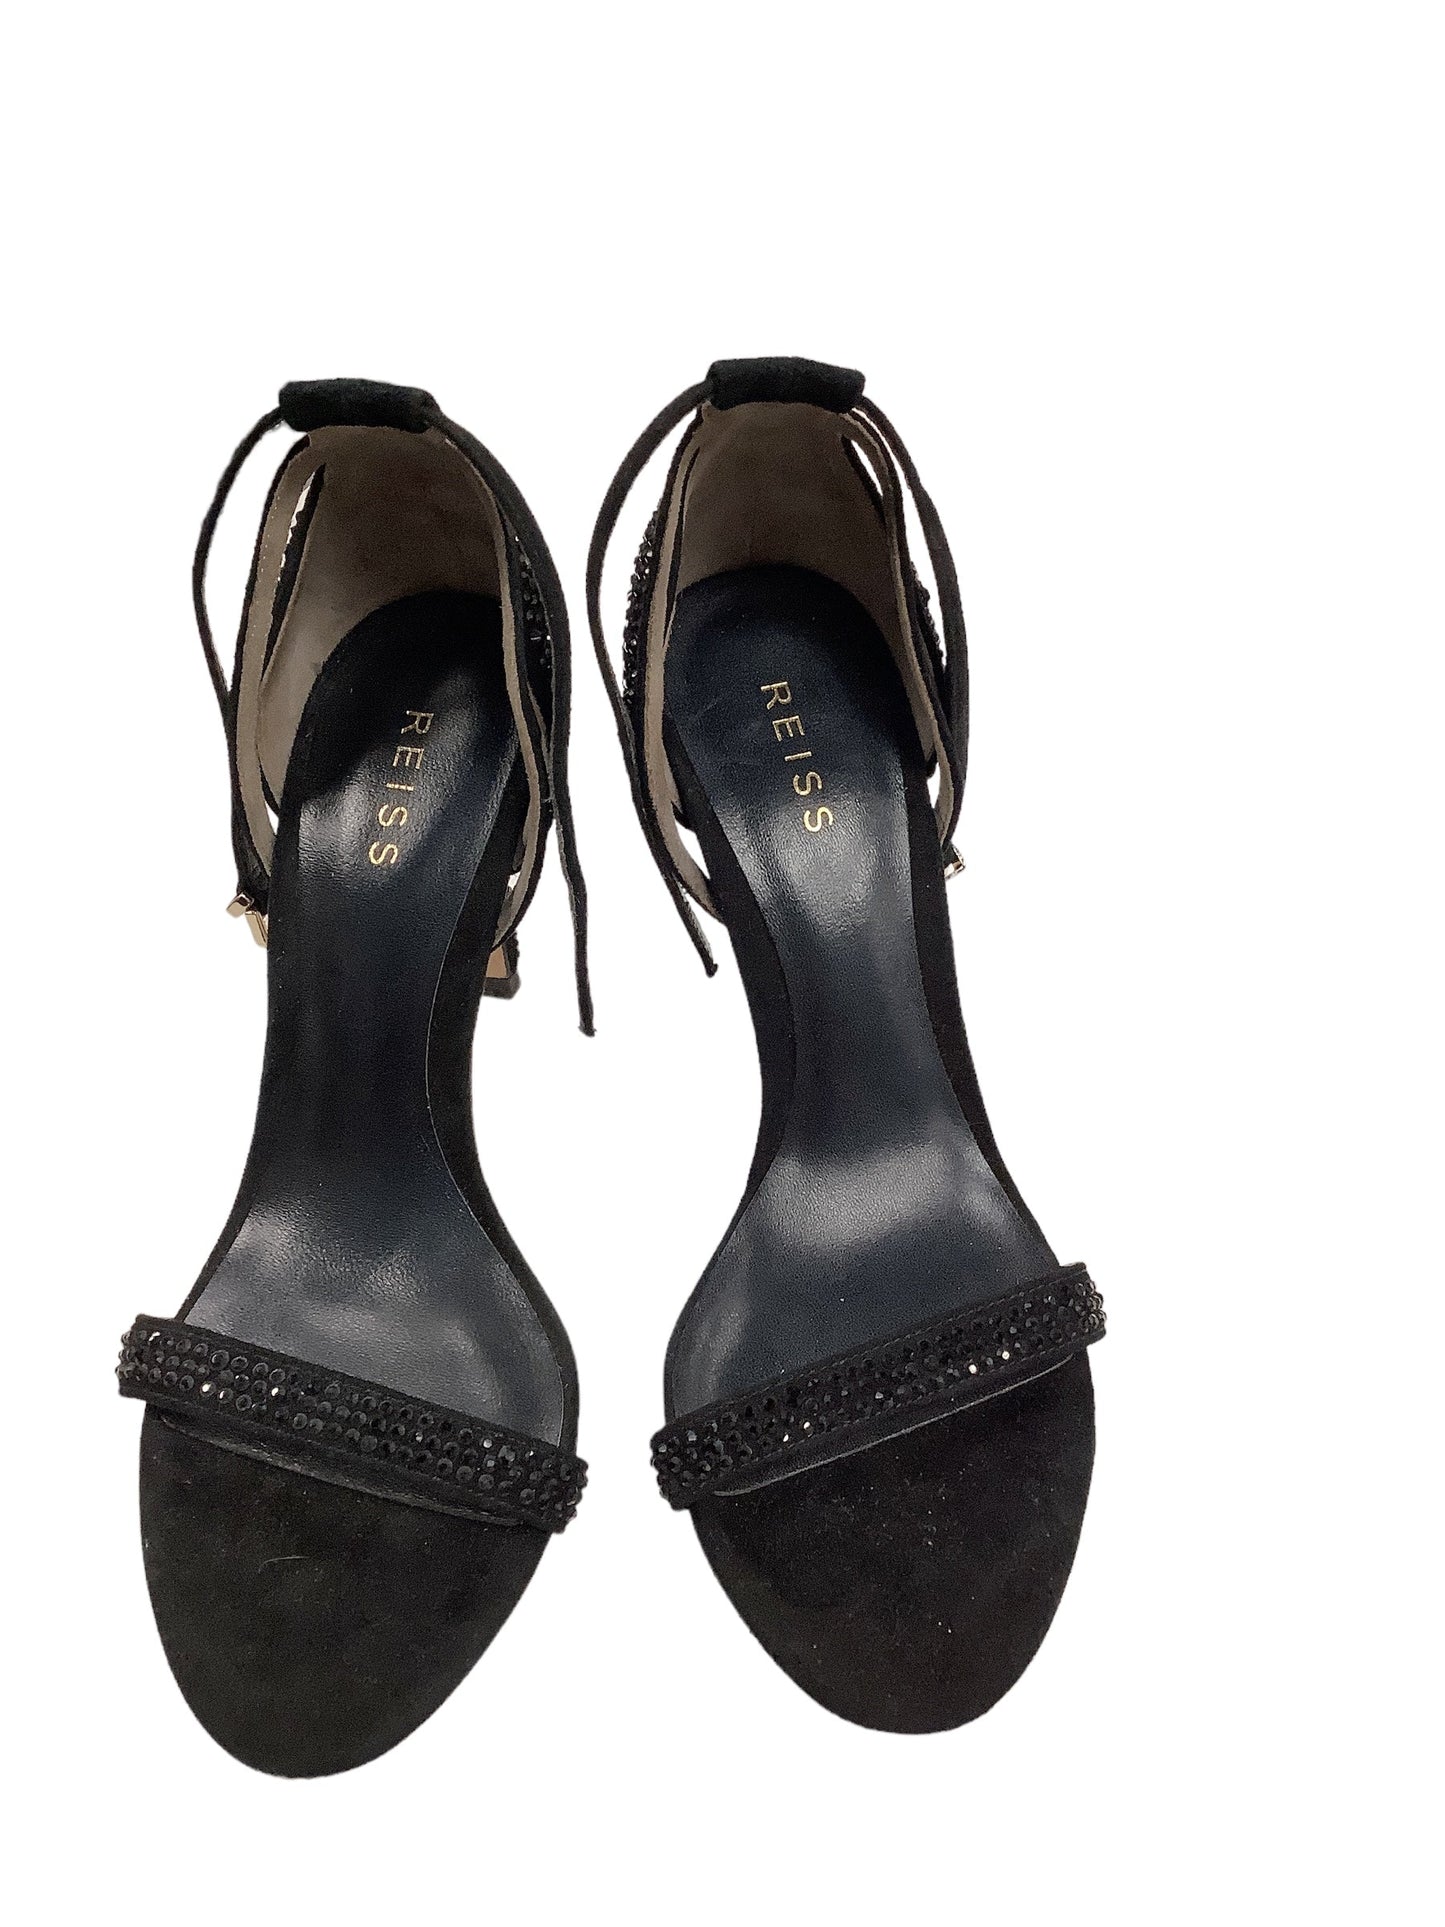 Sandals Heels Stiletto By Reiss  Size: 7.5